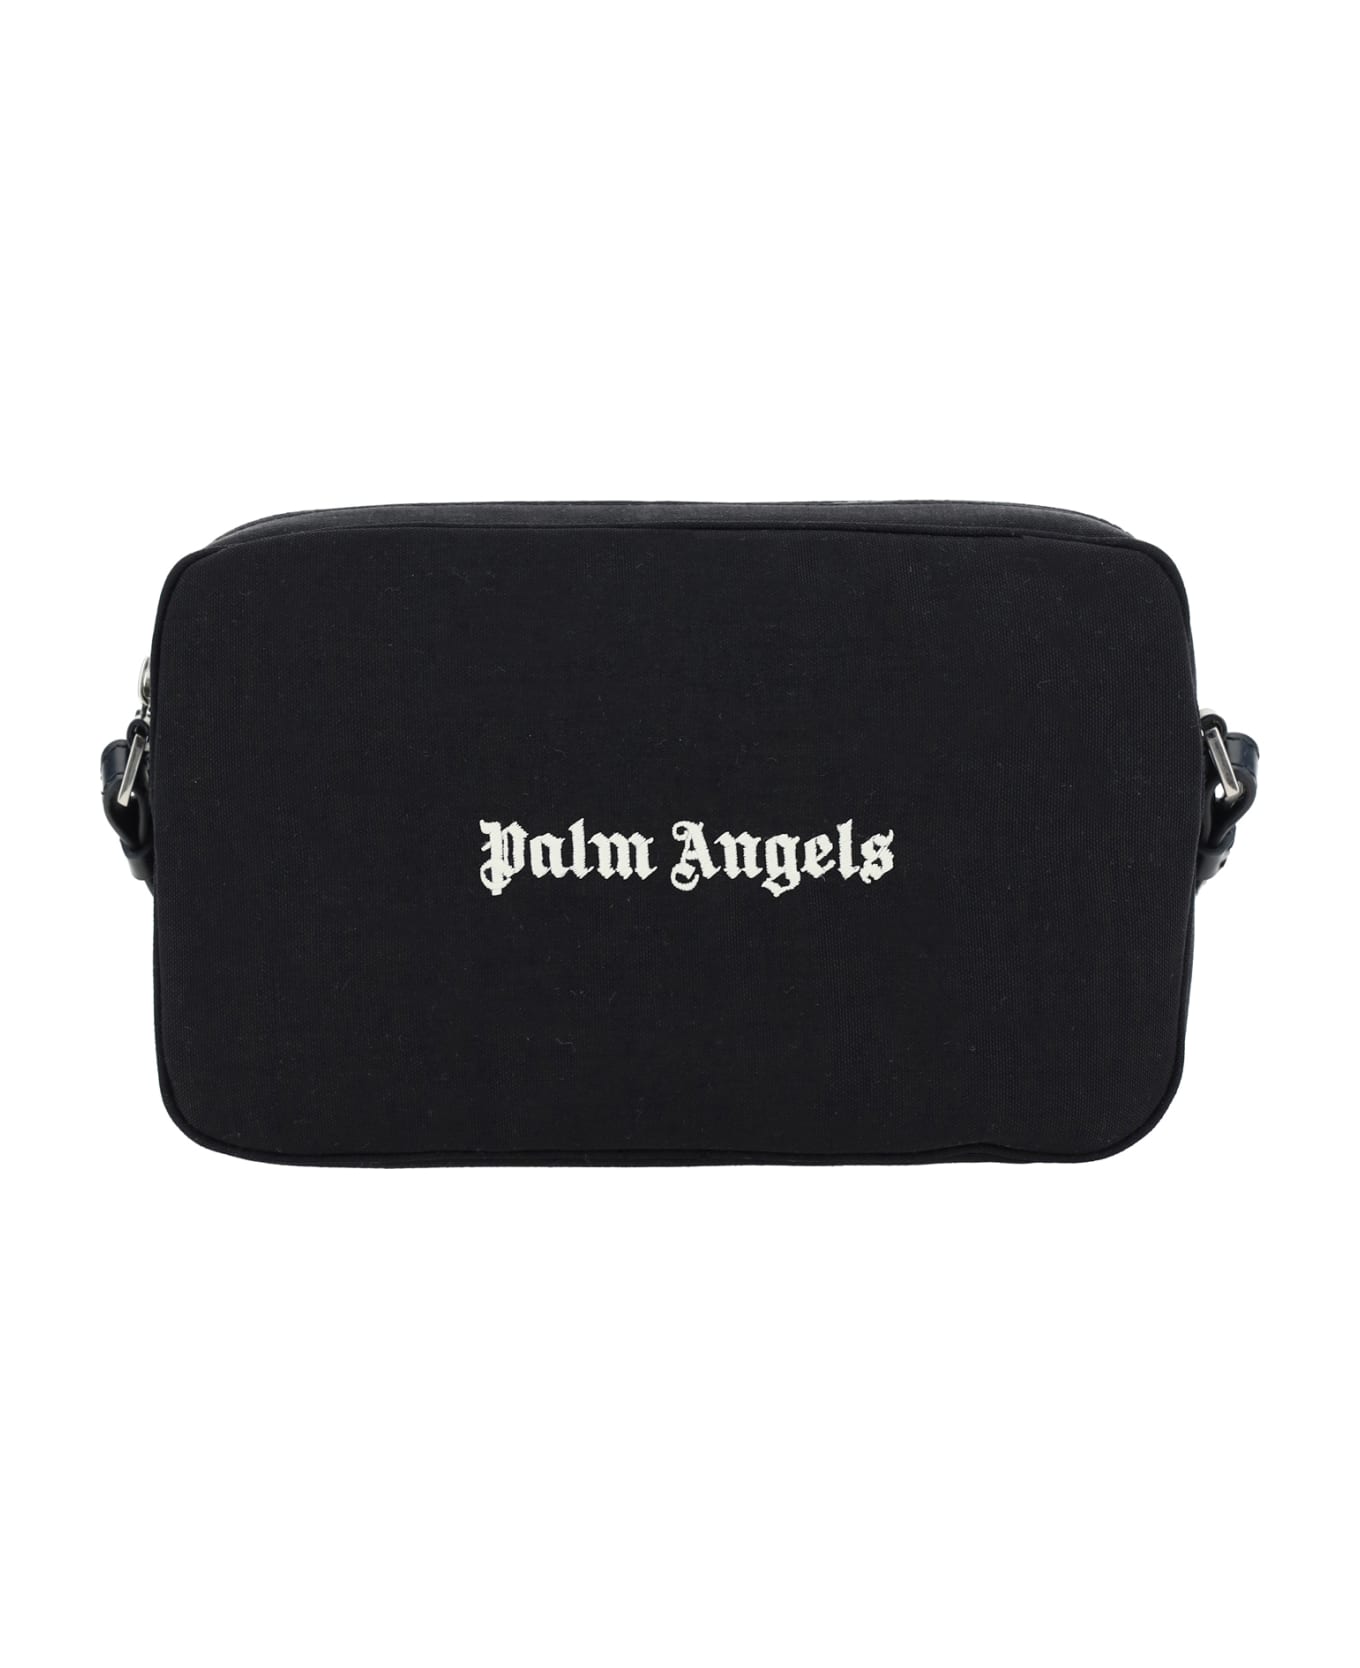 Palm Angels Camera Case Bag - Black White ショルダーバッグ